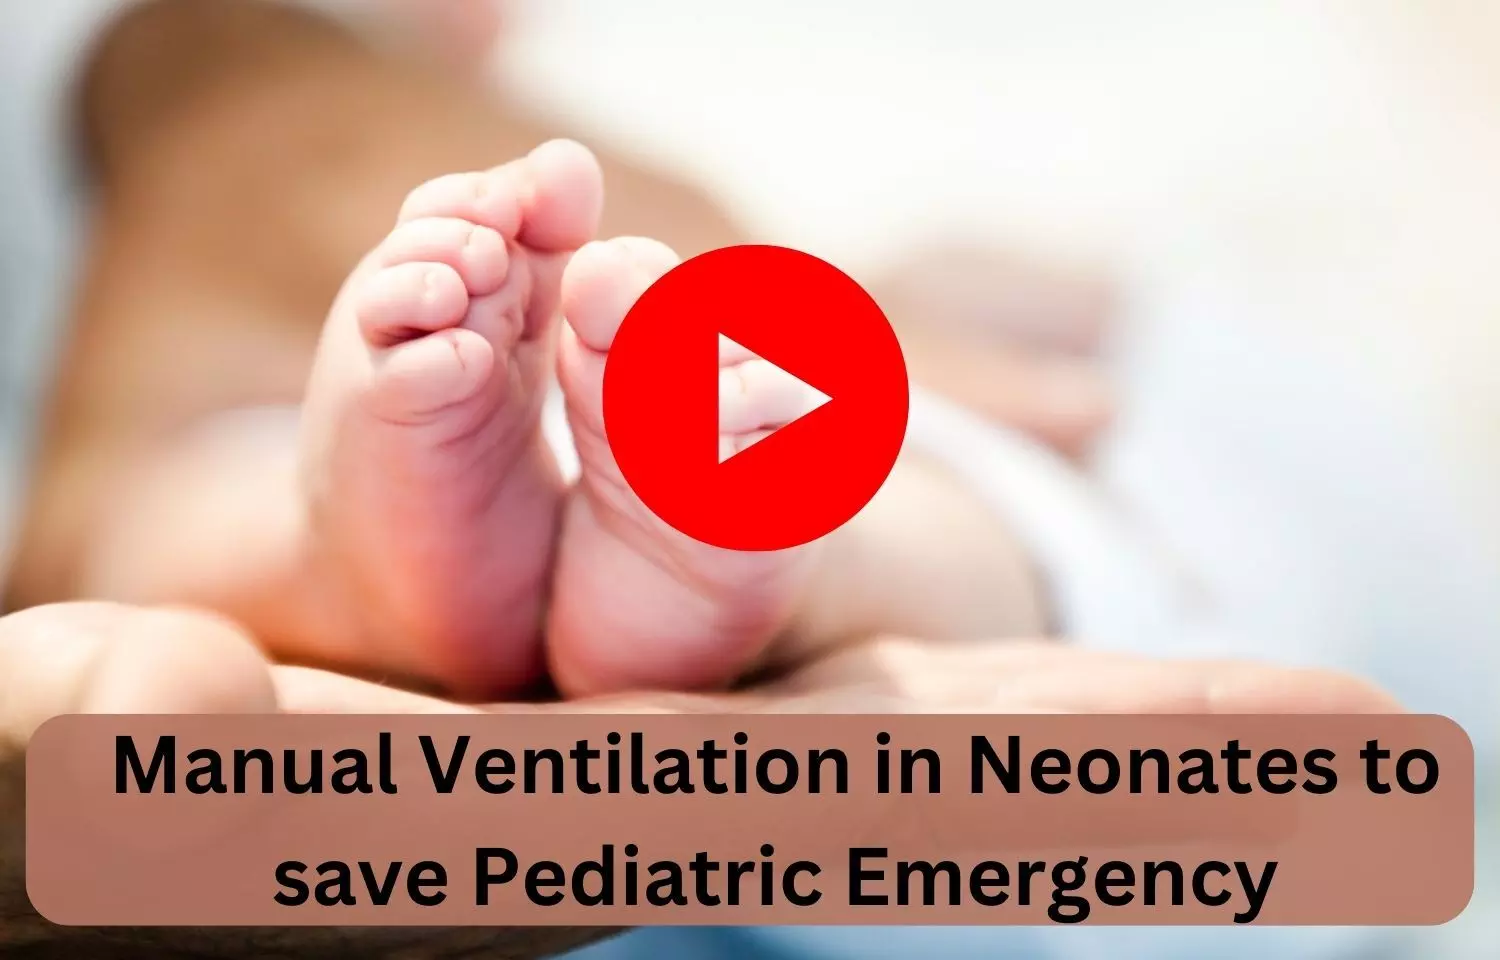 Manual Ventilation in Neonates to save Pediatric Emergency